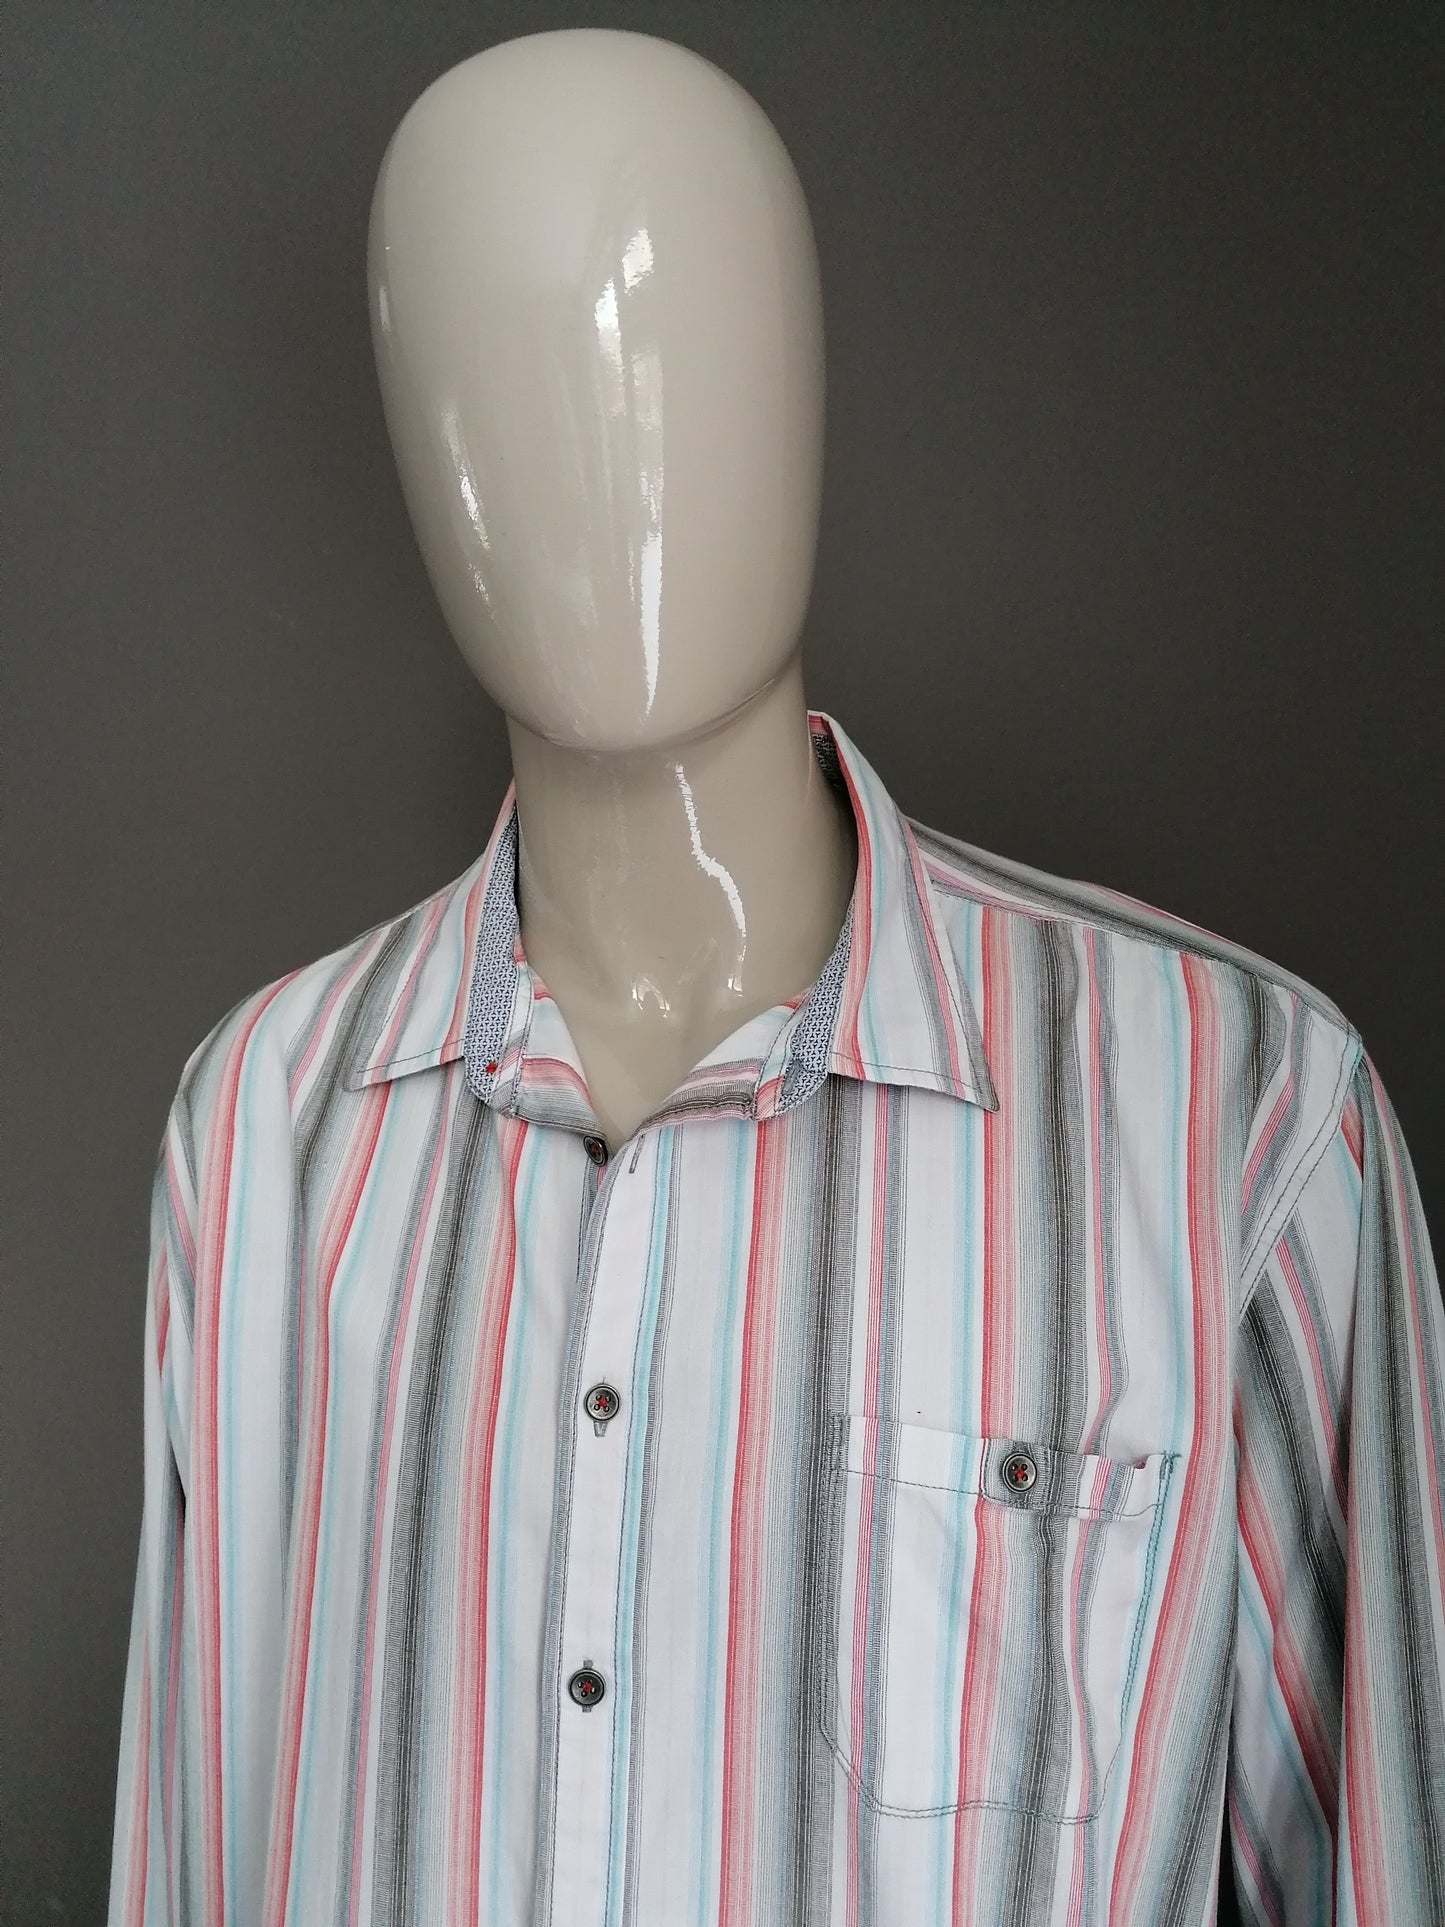 Mantray shirt. Red gray blue white striped. Size XXXL / 3XL.